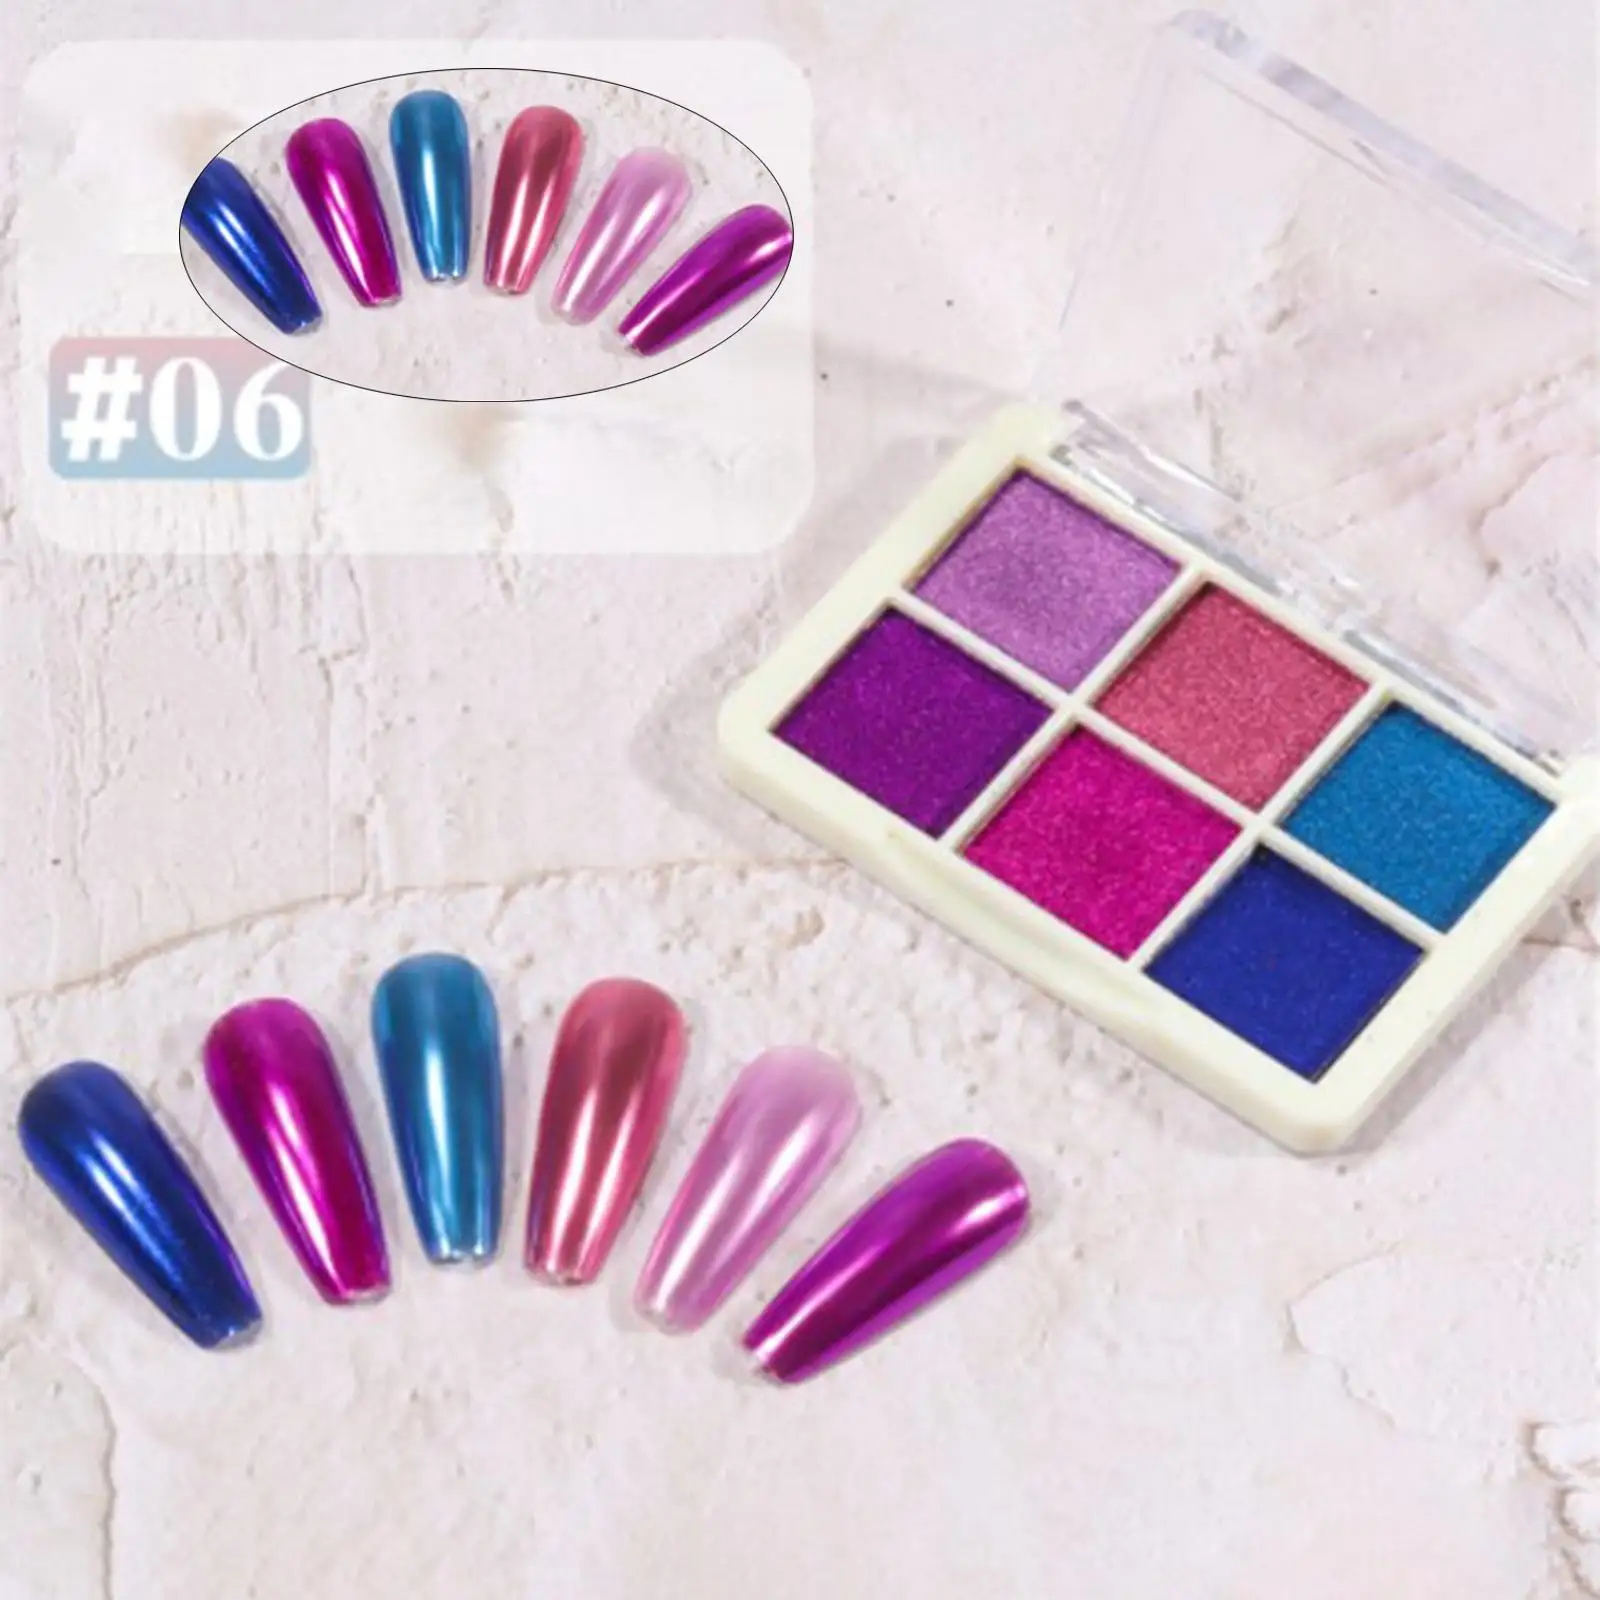 6 Colors Nail Powder Polish Pigment Holo  for Salon Art Decoration Holographic Nail Glitter